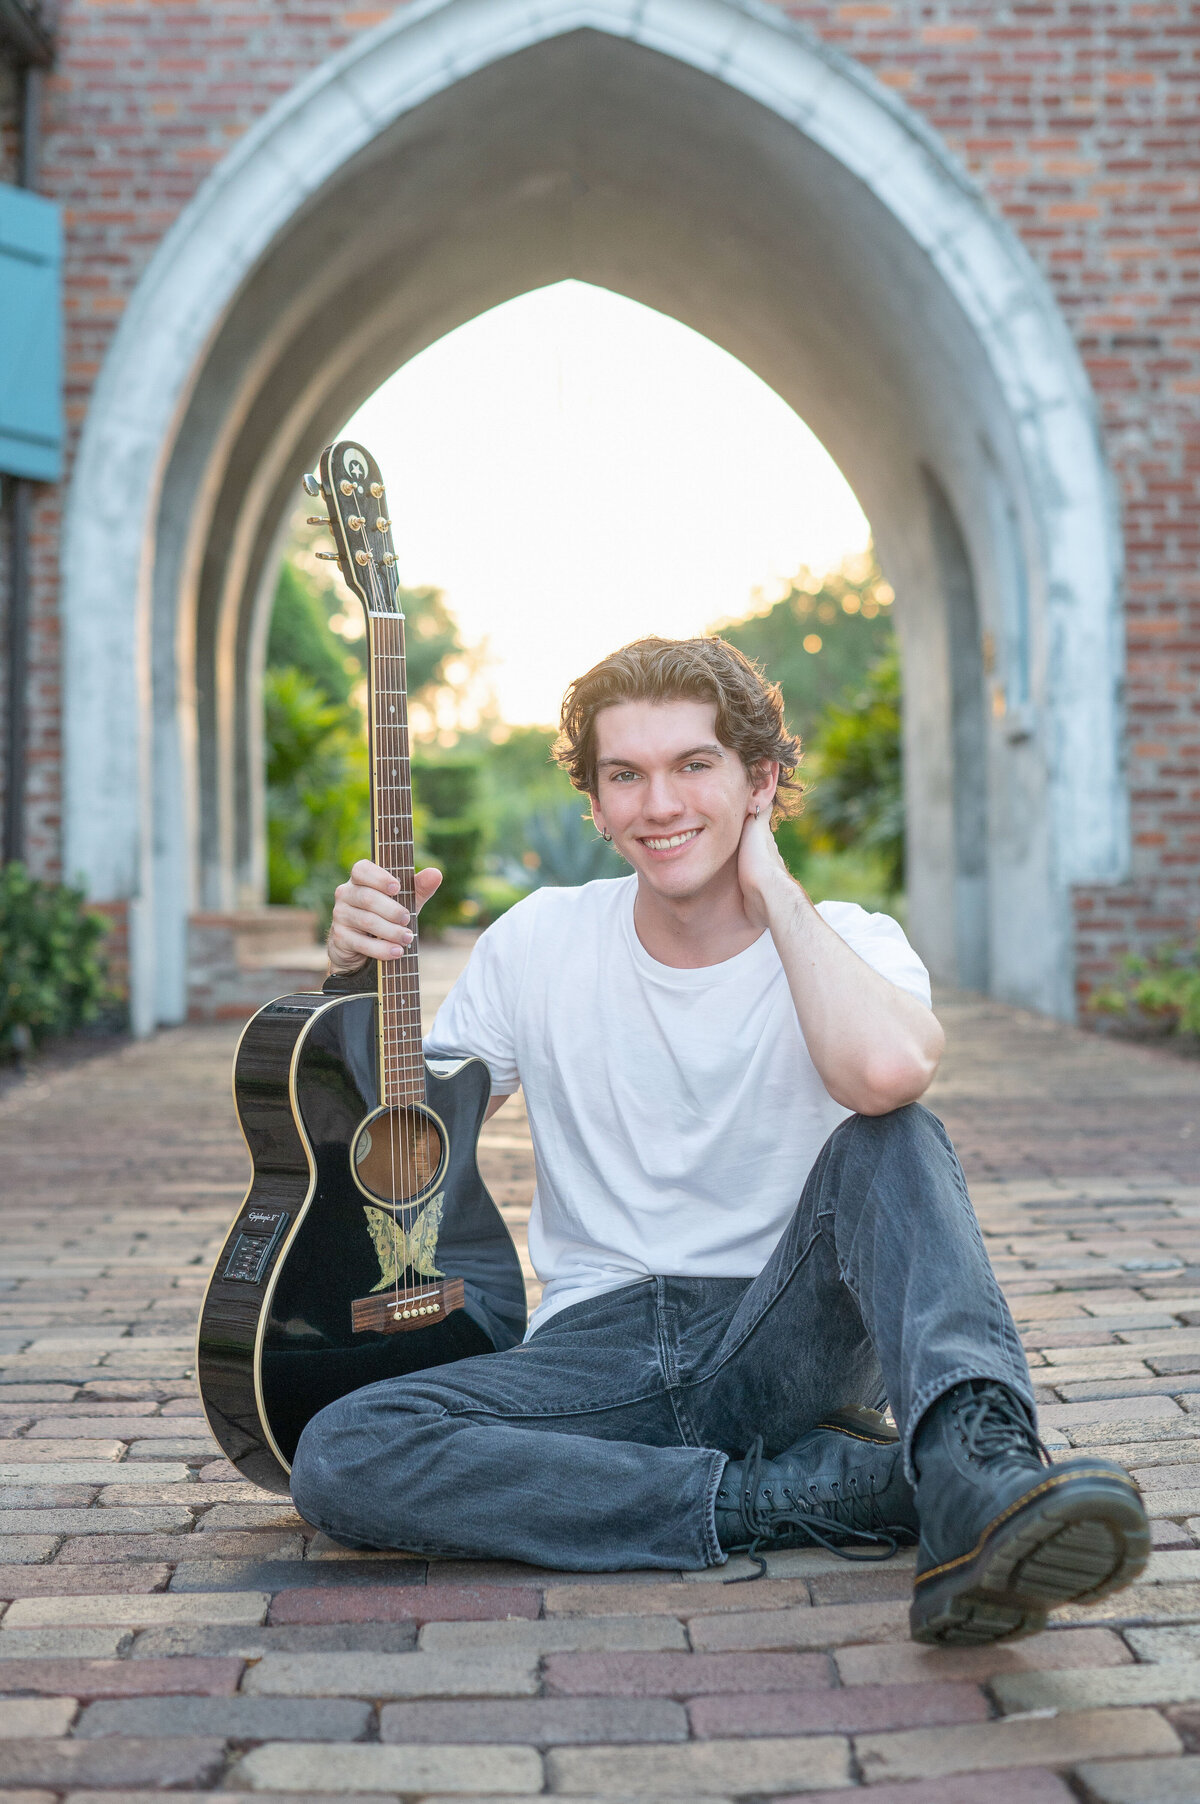 High school senior boy sitting on brick walkway holding a guitar smiling.